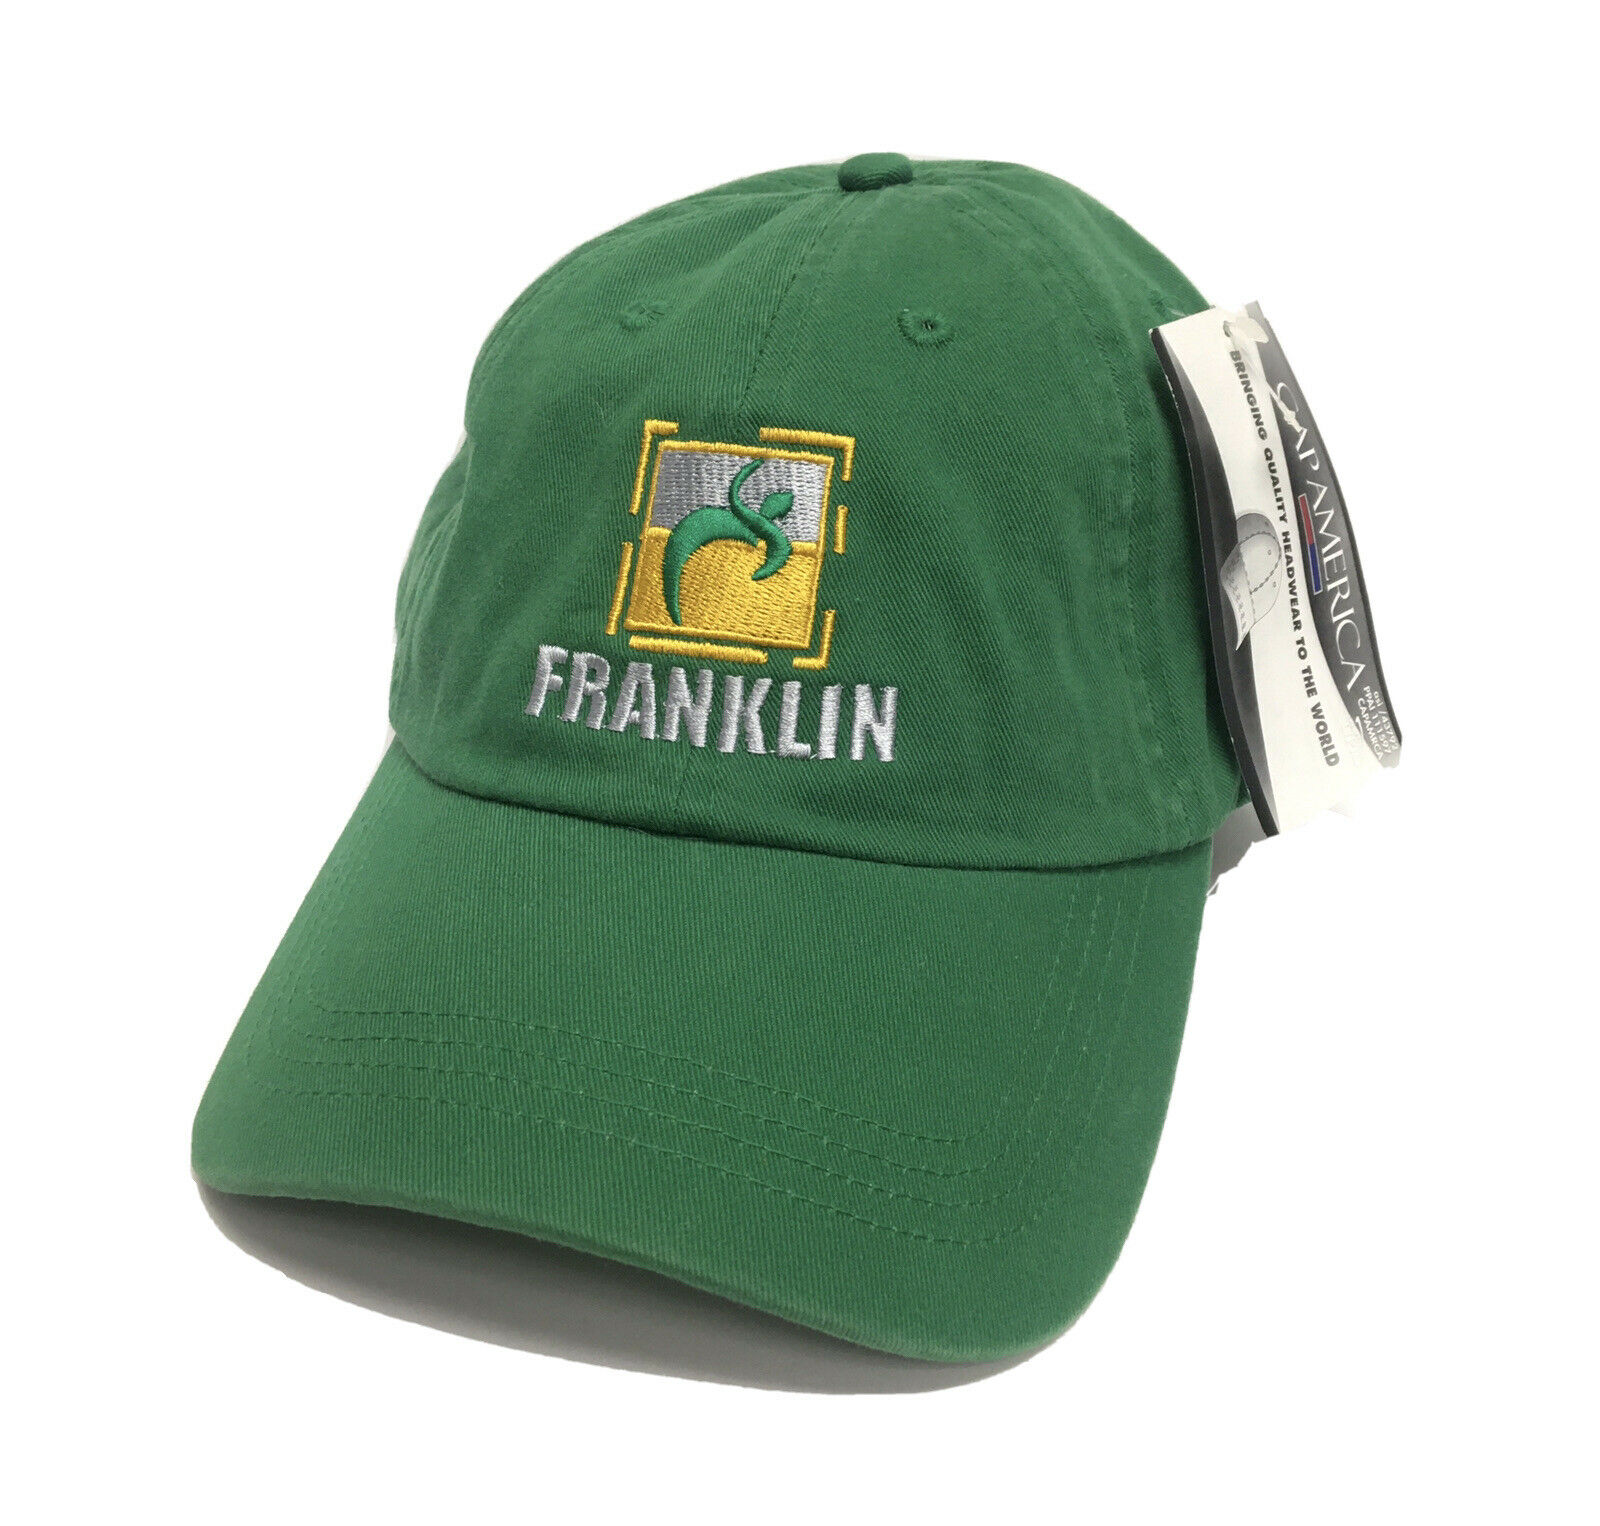 NWT Franklin Trucking Camo Camouflage Strap Back Green Hat Cap Trucker Farming